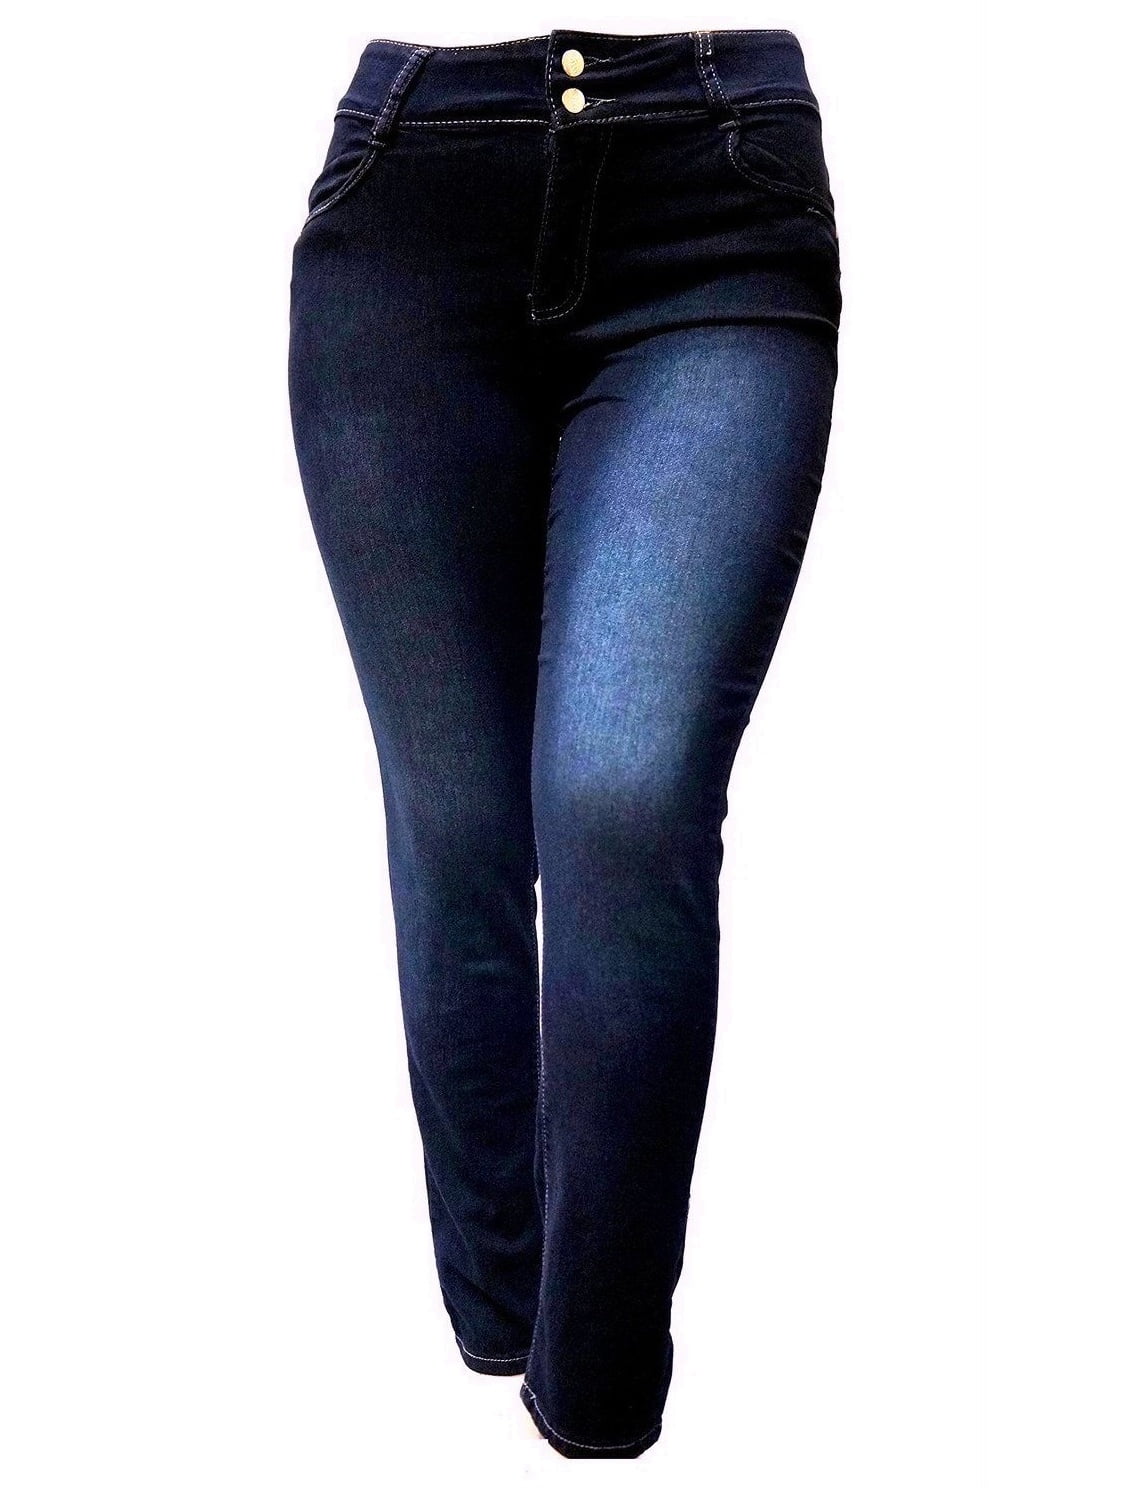 blue black skinny jeans